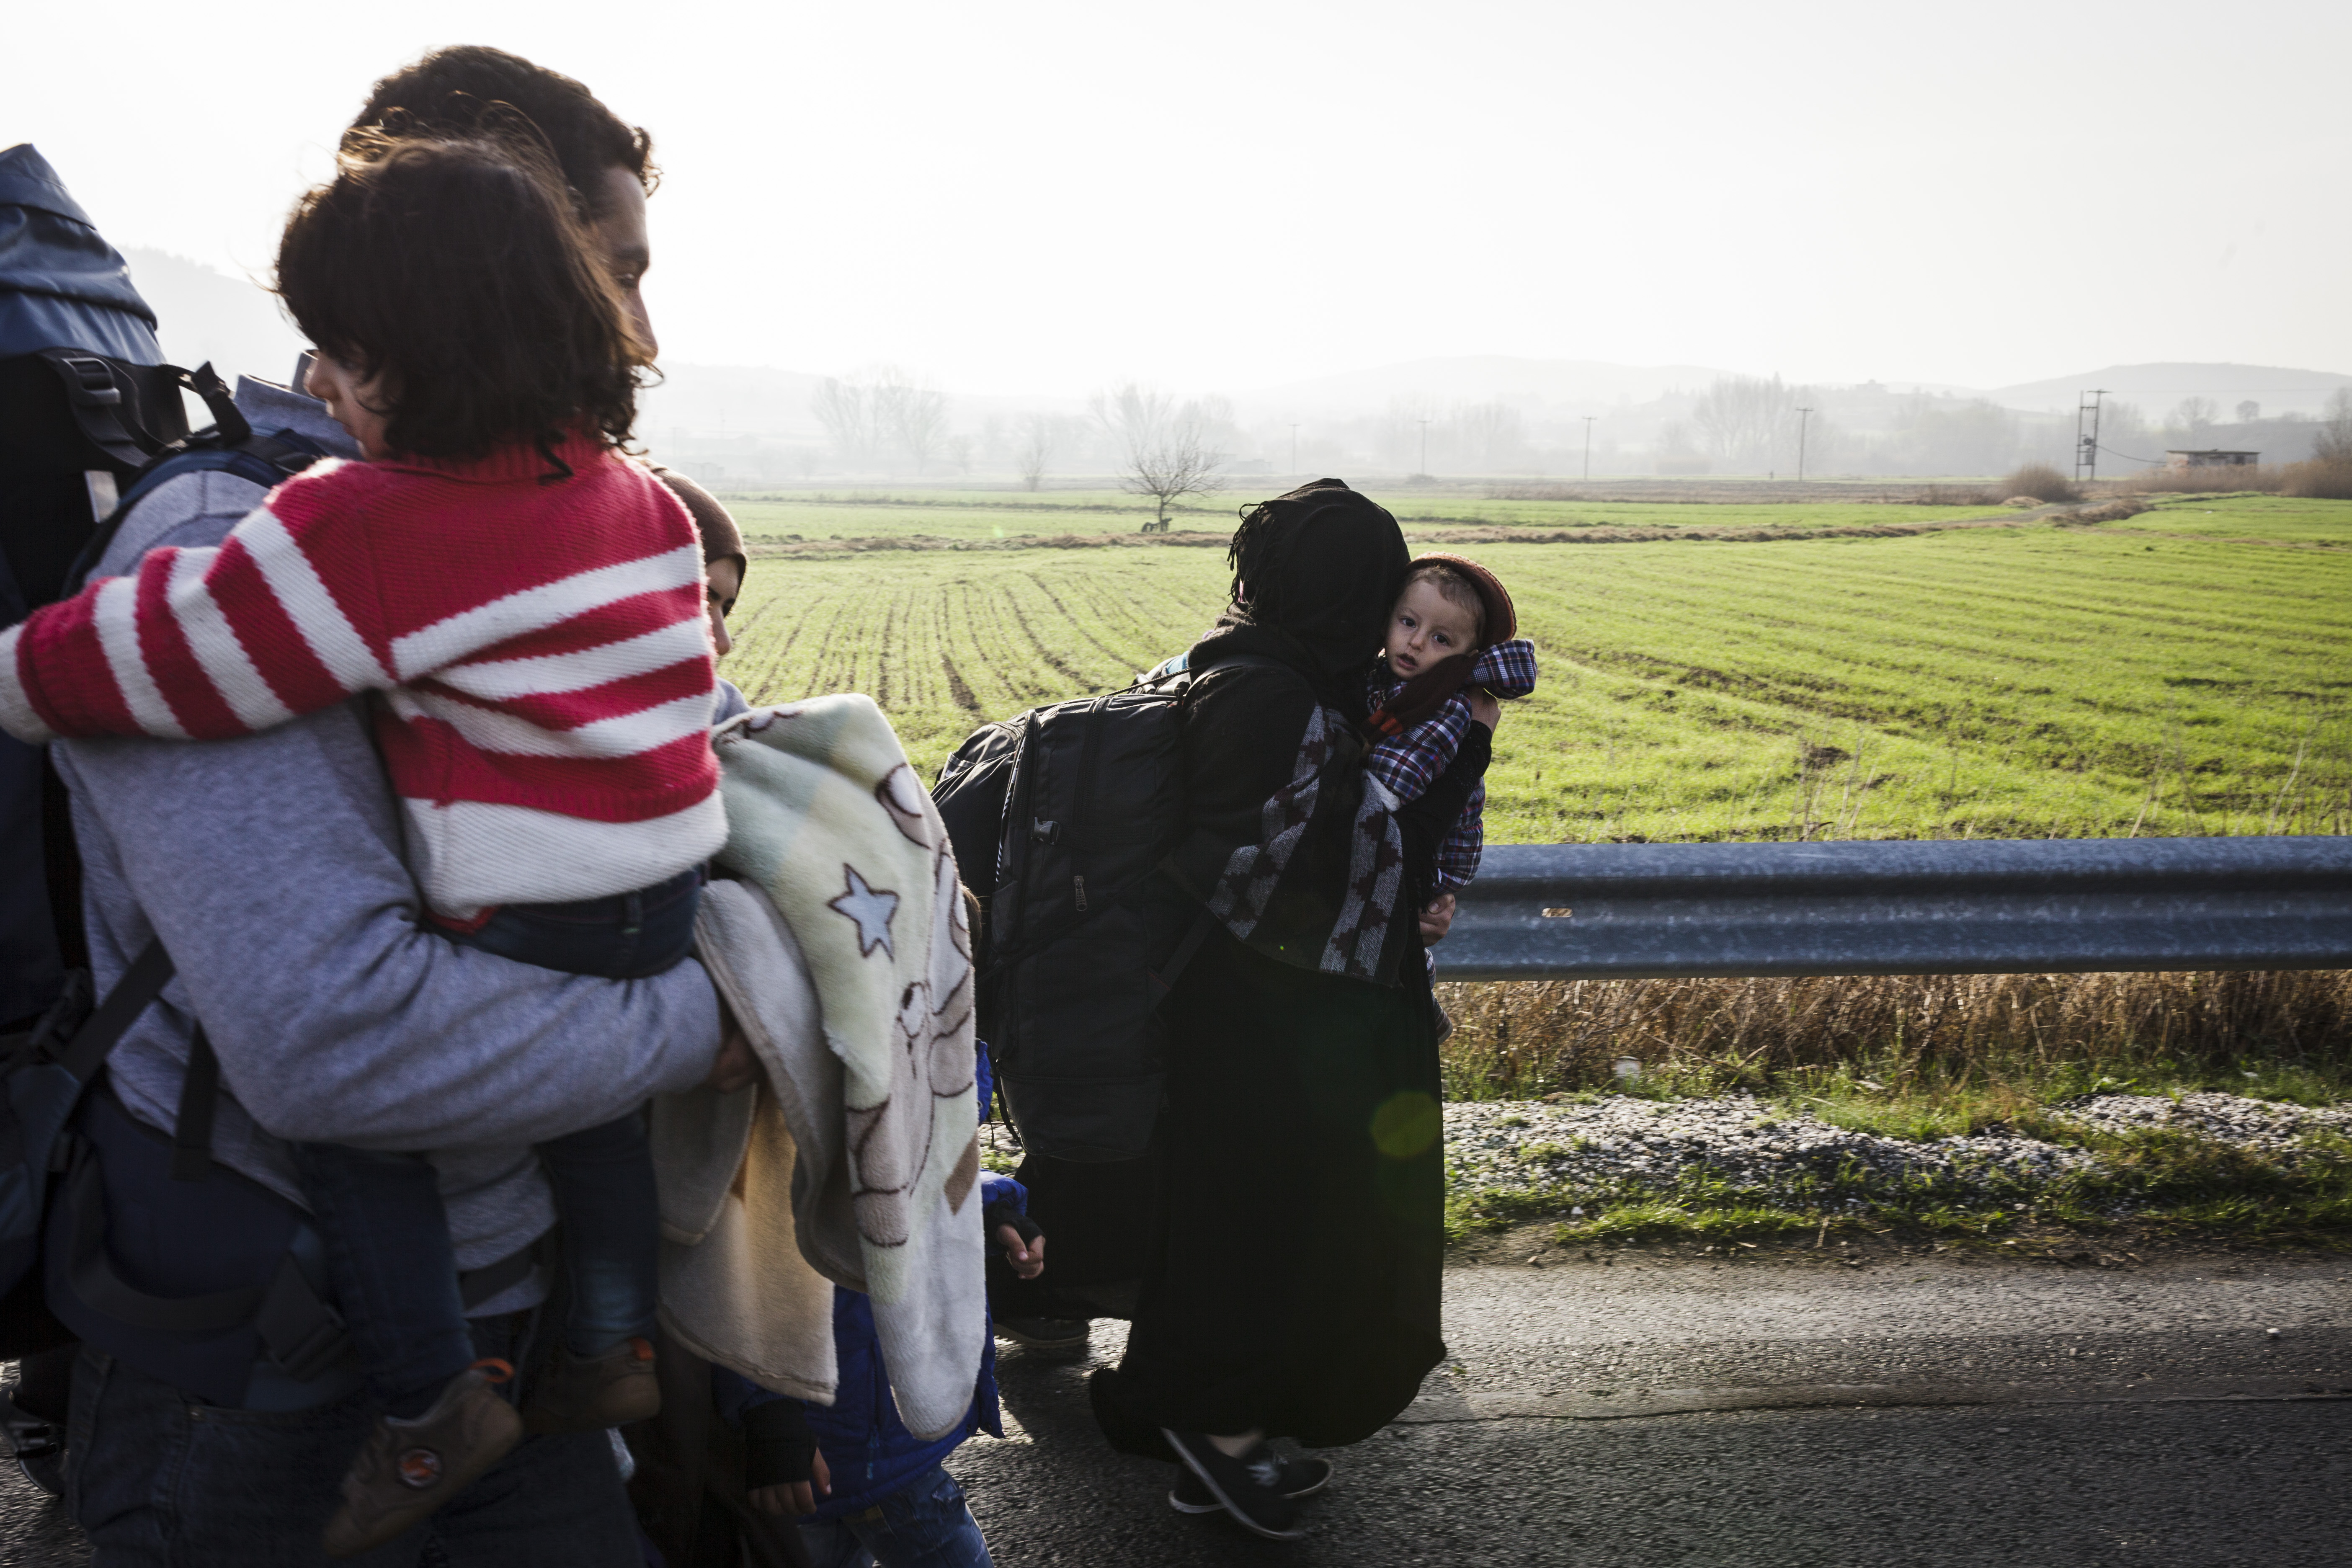 A family of Kurdish refugees from Aleppo walk towards the village of Idomeni on the Greek - FYR of Macedonia border.